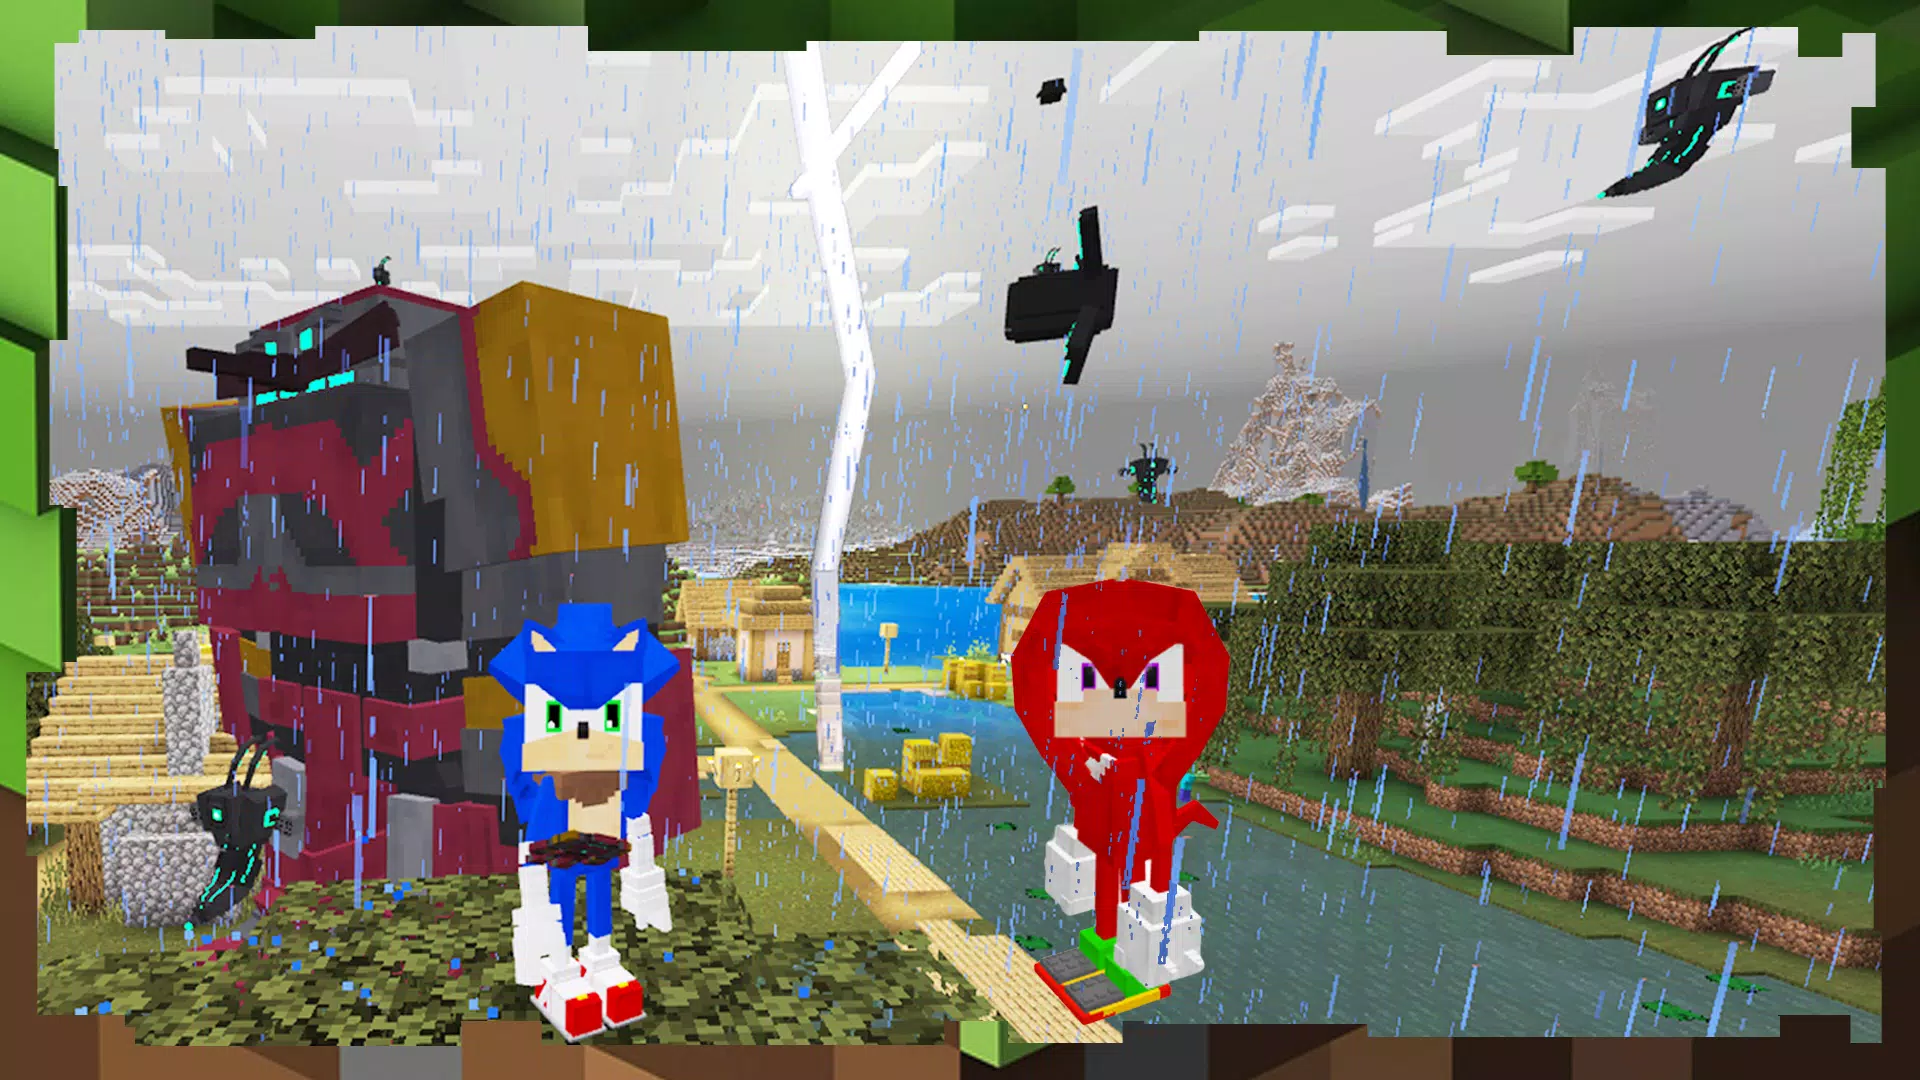 Baixar Sonic The Hedgehog 2 Classic 1.7 Android - Download APK Grátis